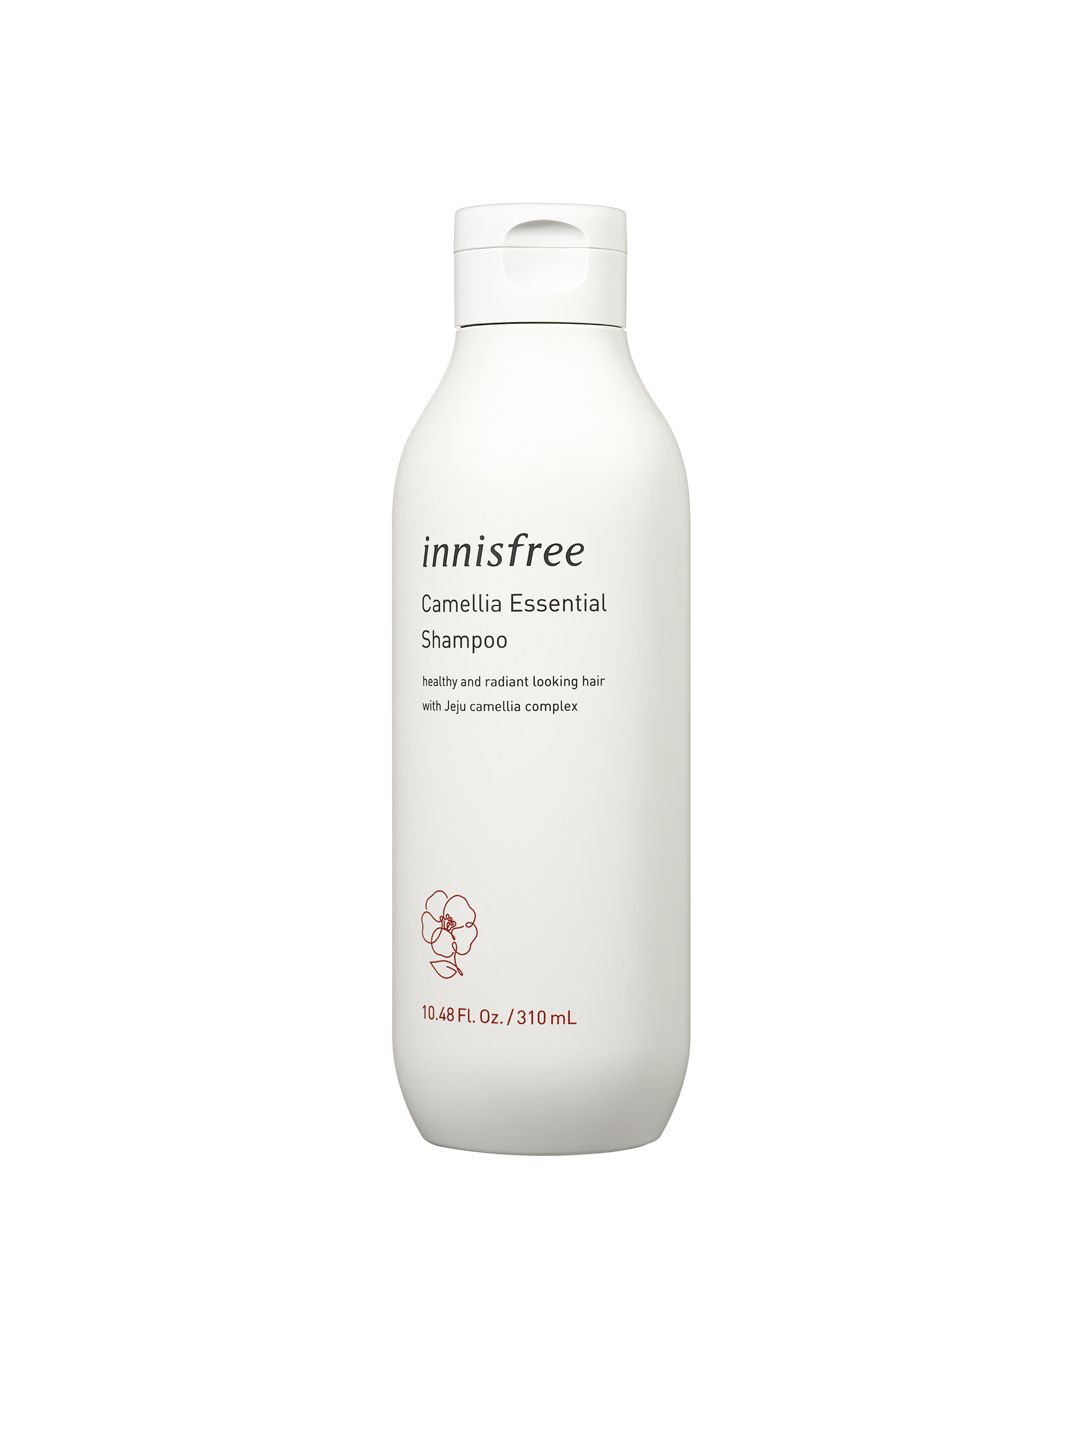 Innisfree Camellia Essential Shampoo with Jeju Camellia Complex - 310 ml Price in India